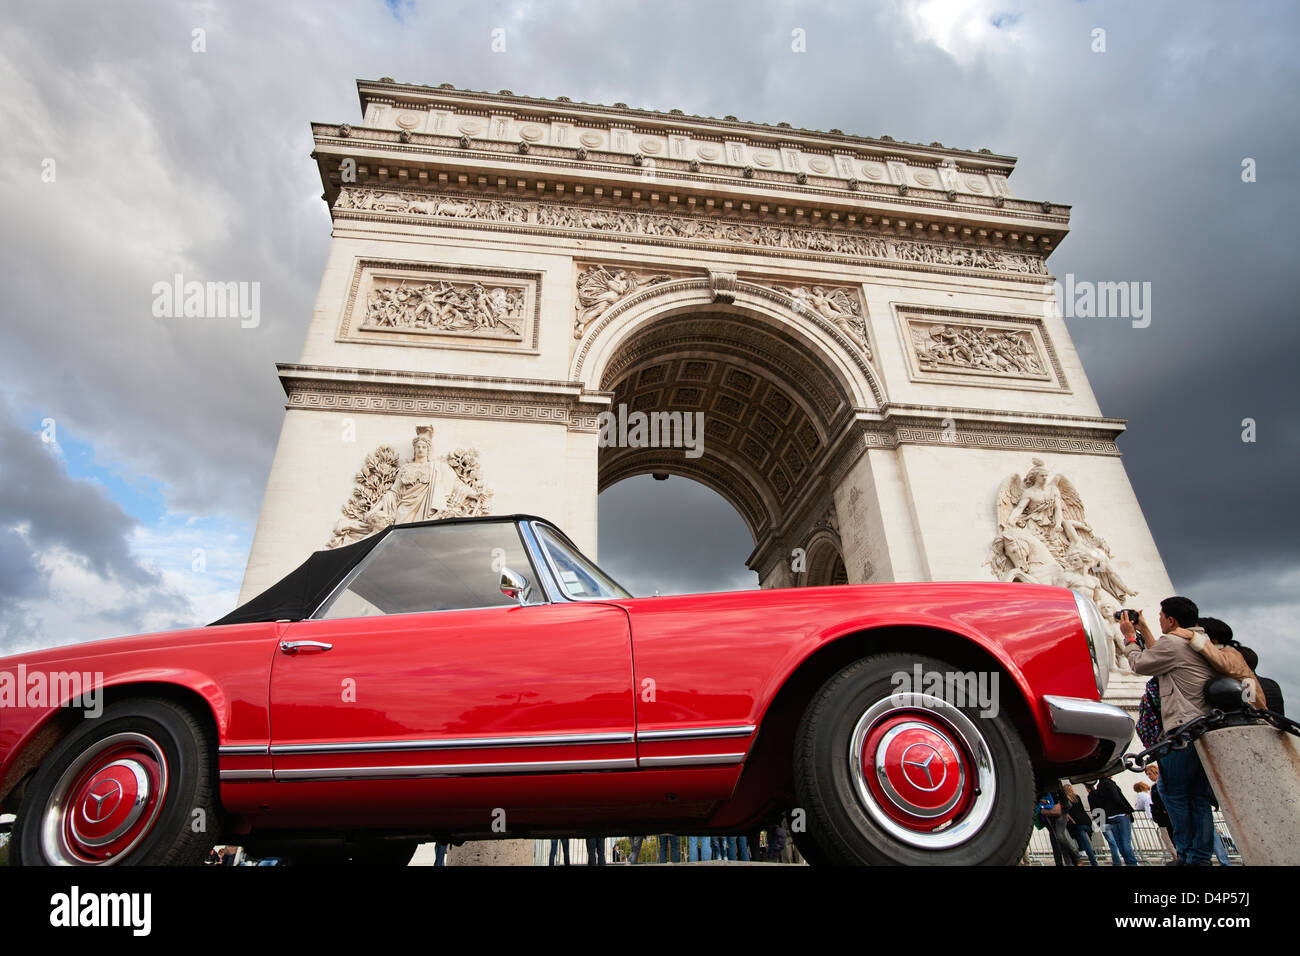 Japanese couple photographing the Arc de Triomphe in Paris; red Mercedes veteran car in front of  Arc de Triumph Stock Photo